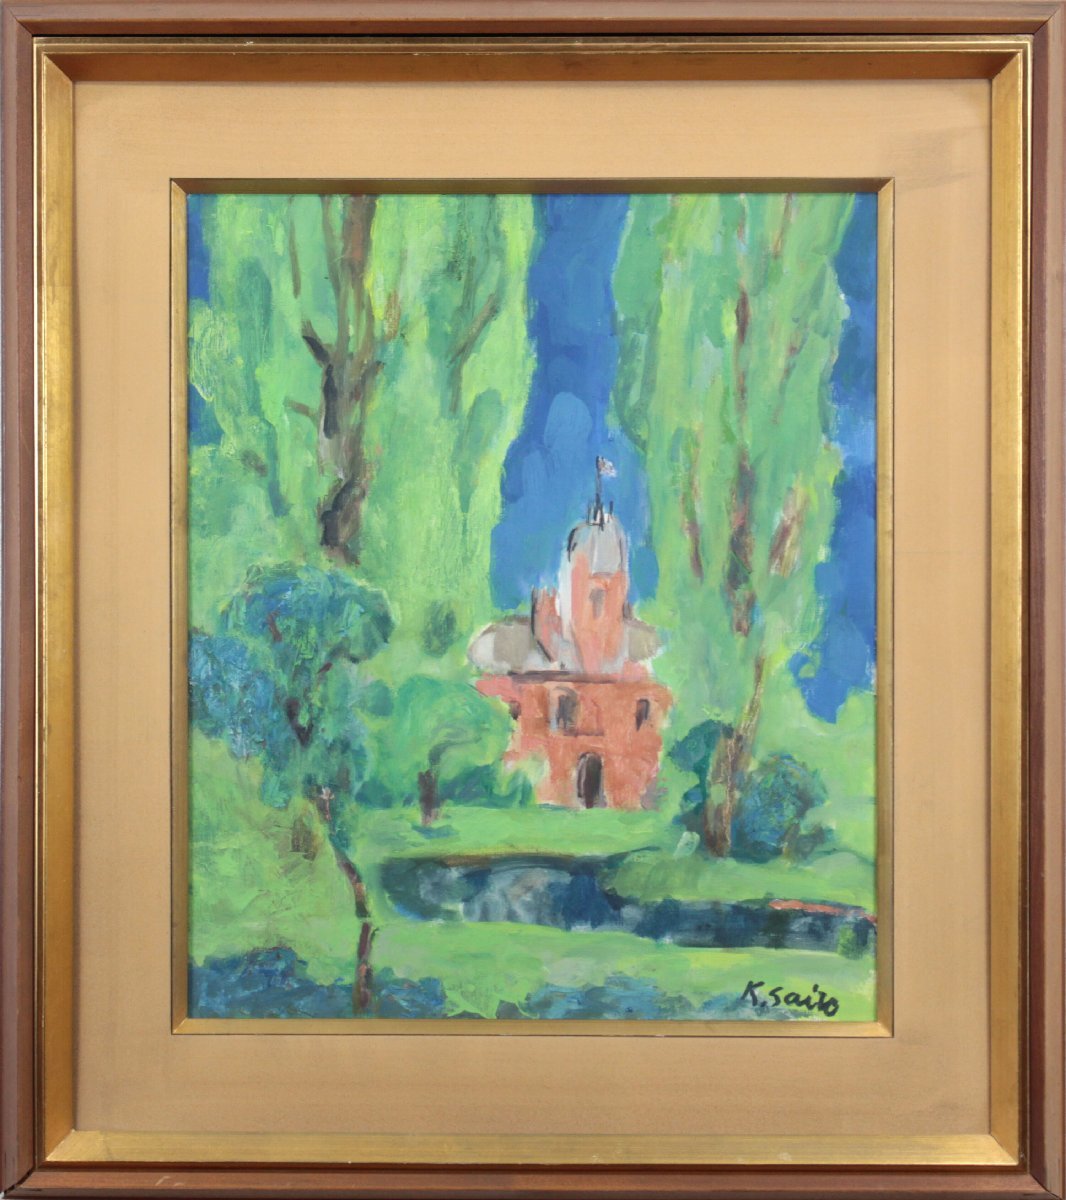 Oficina Provincial de Saito Koichi en Pintura al óleo verde fresca Pintura enmarcada [Galería de Hokkaido], Cuadro, Pintura al óleo, Naturaleza, Pintura de paisaje